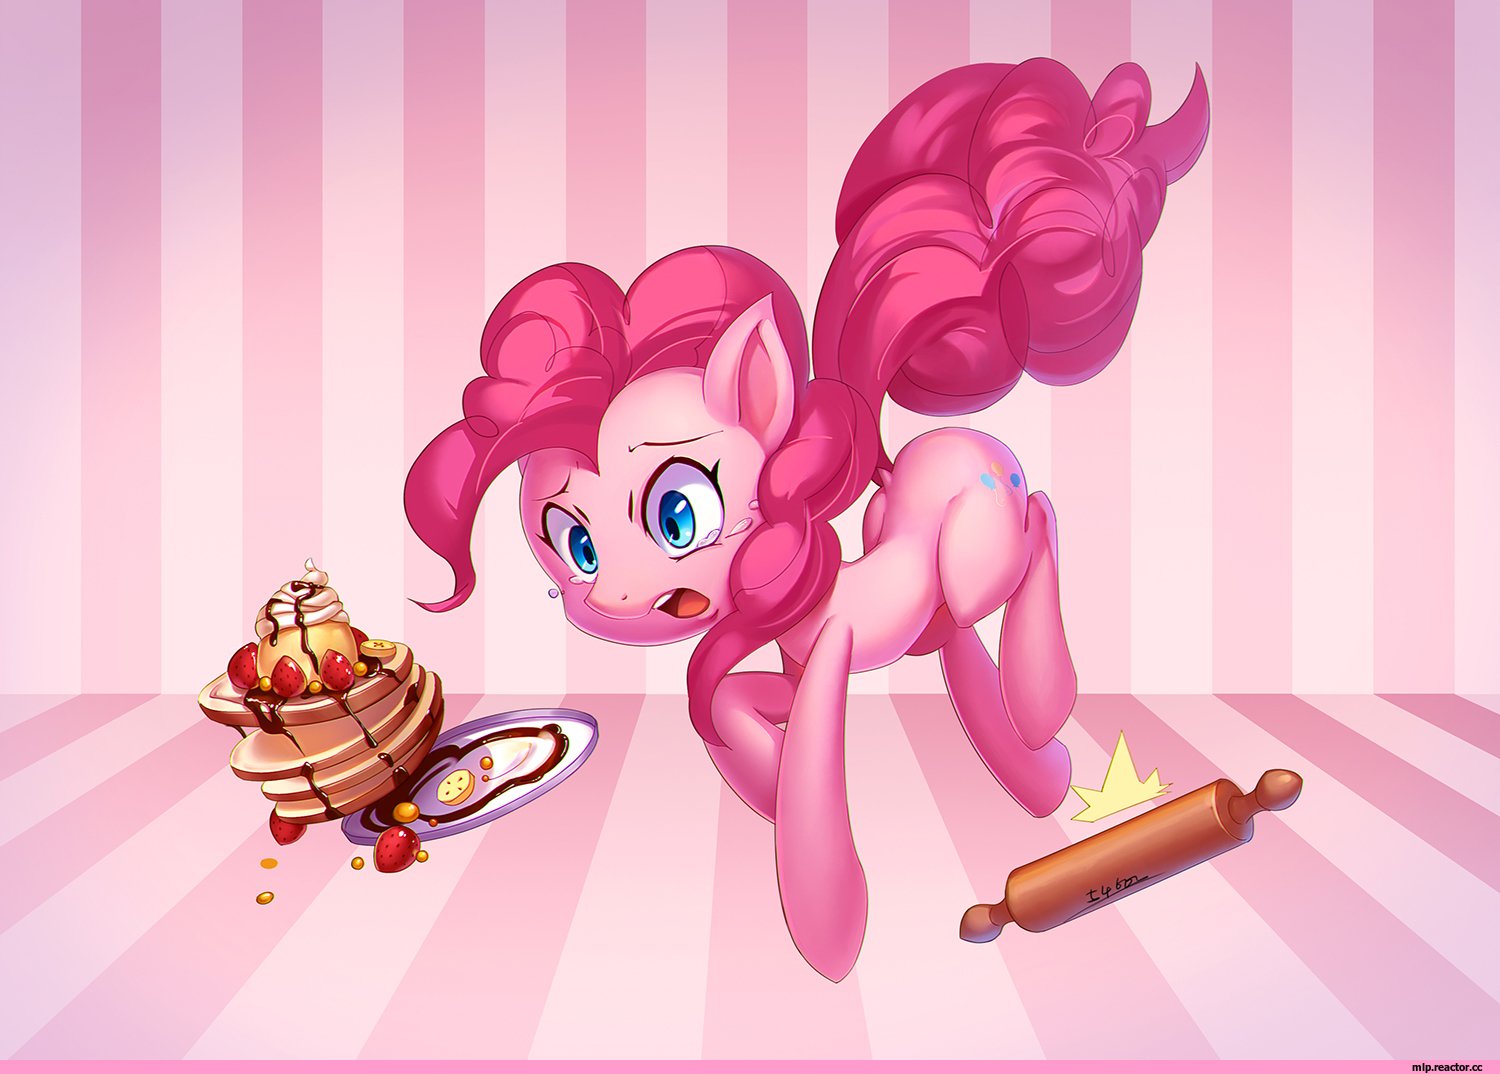 Пинки пай на русском. Пинки Пай. МЛП Пинки Пай арт. My little Pony Cooking with Pinkie pie игра. Cooking with Pinkie pie 0.7.5.